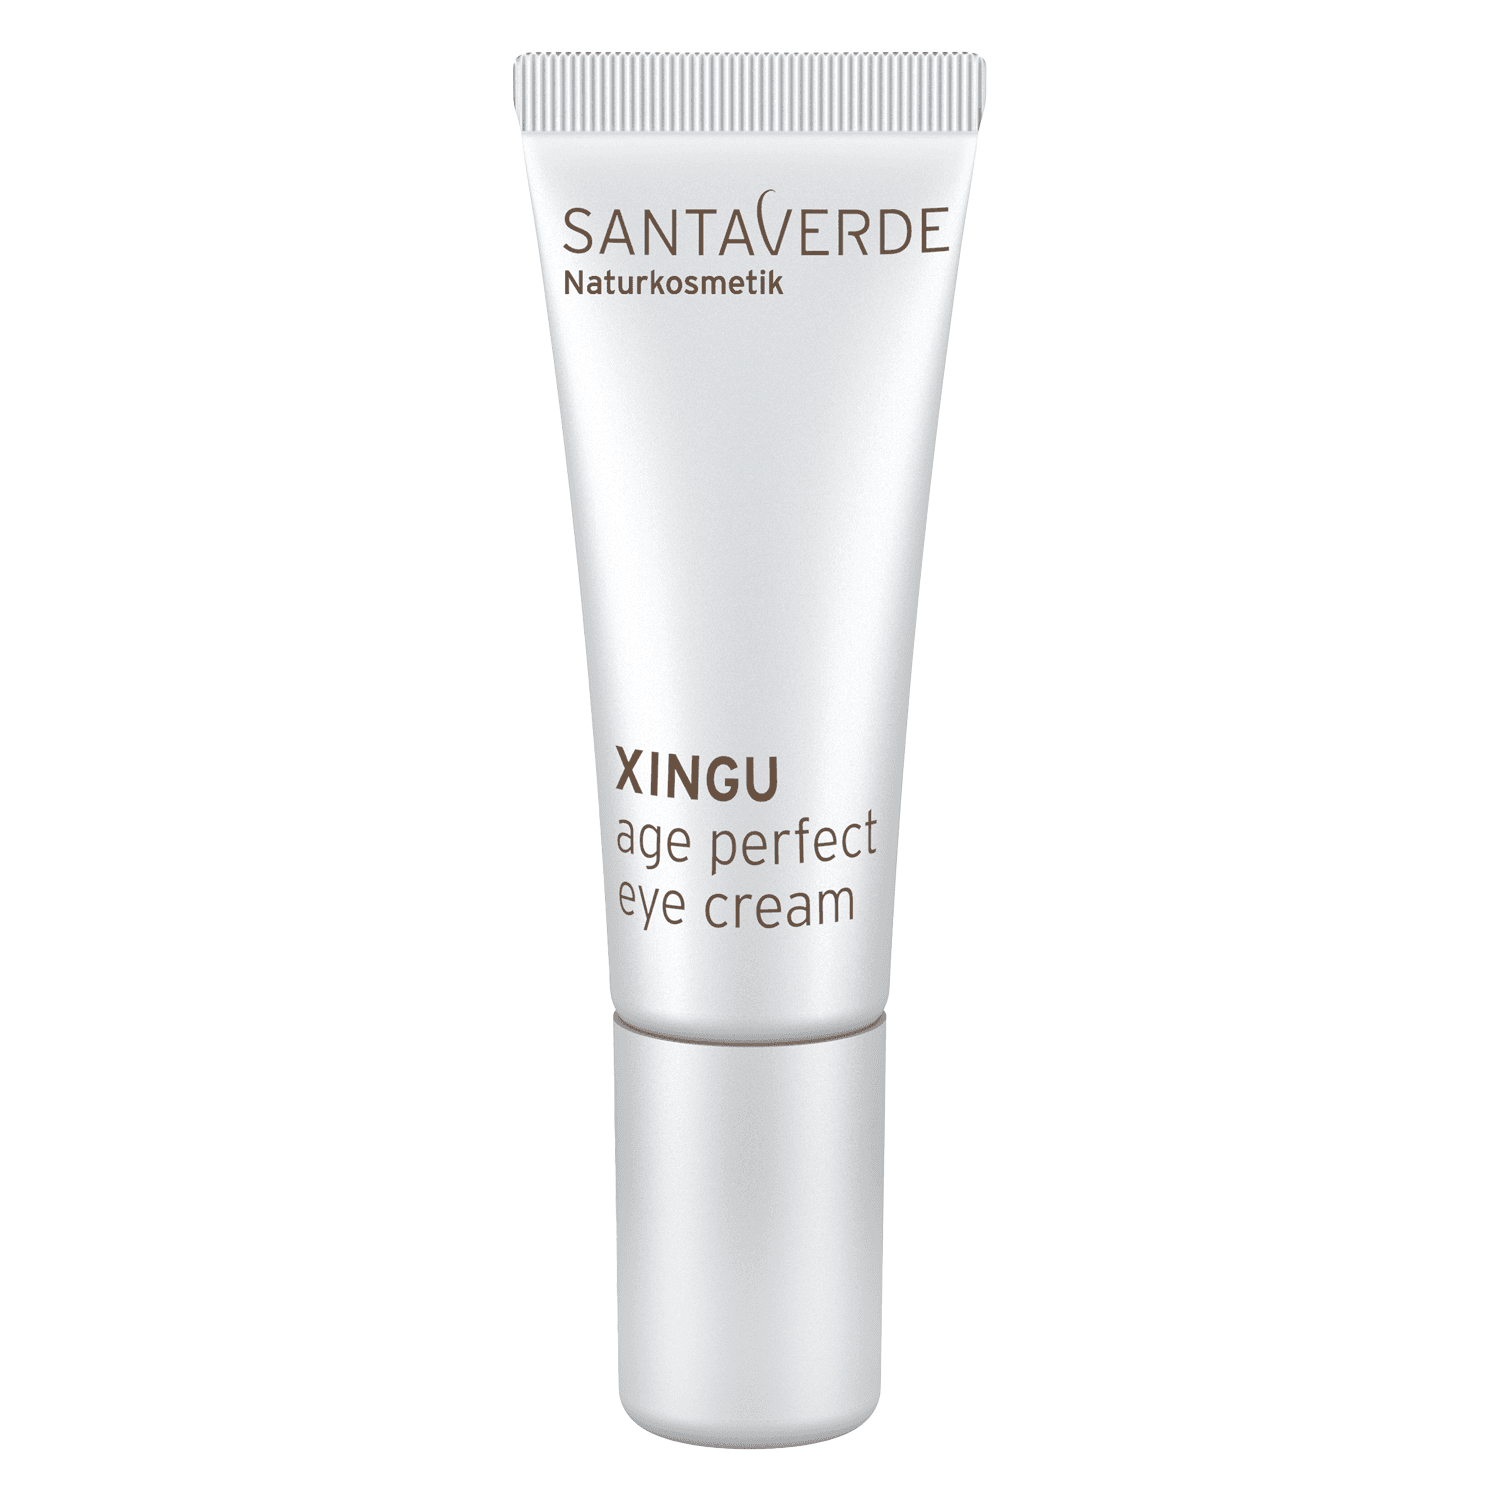 XINGU - age perfect eye cream